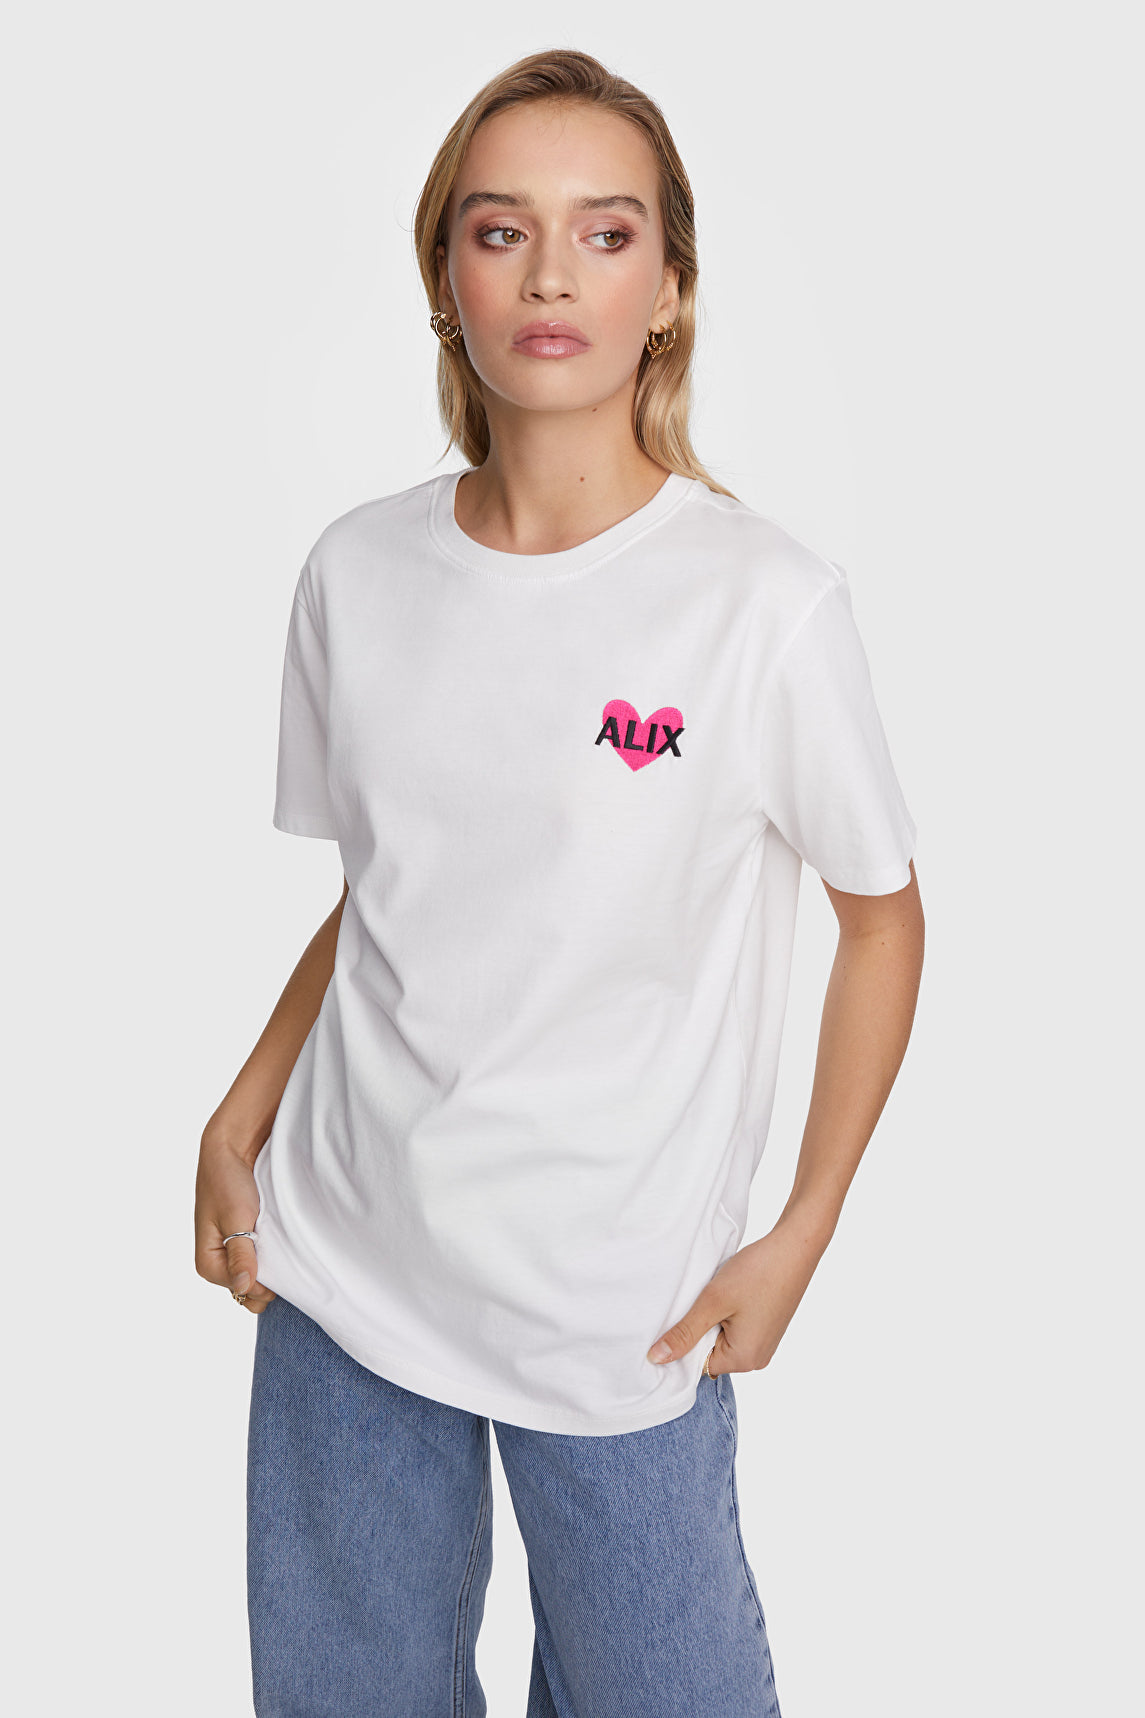 Alix the Label hart t-shirt wit